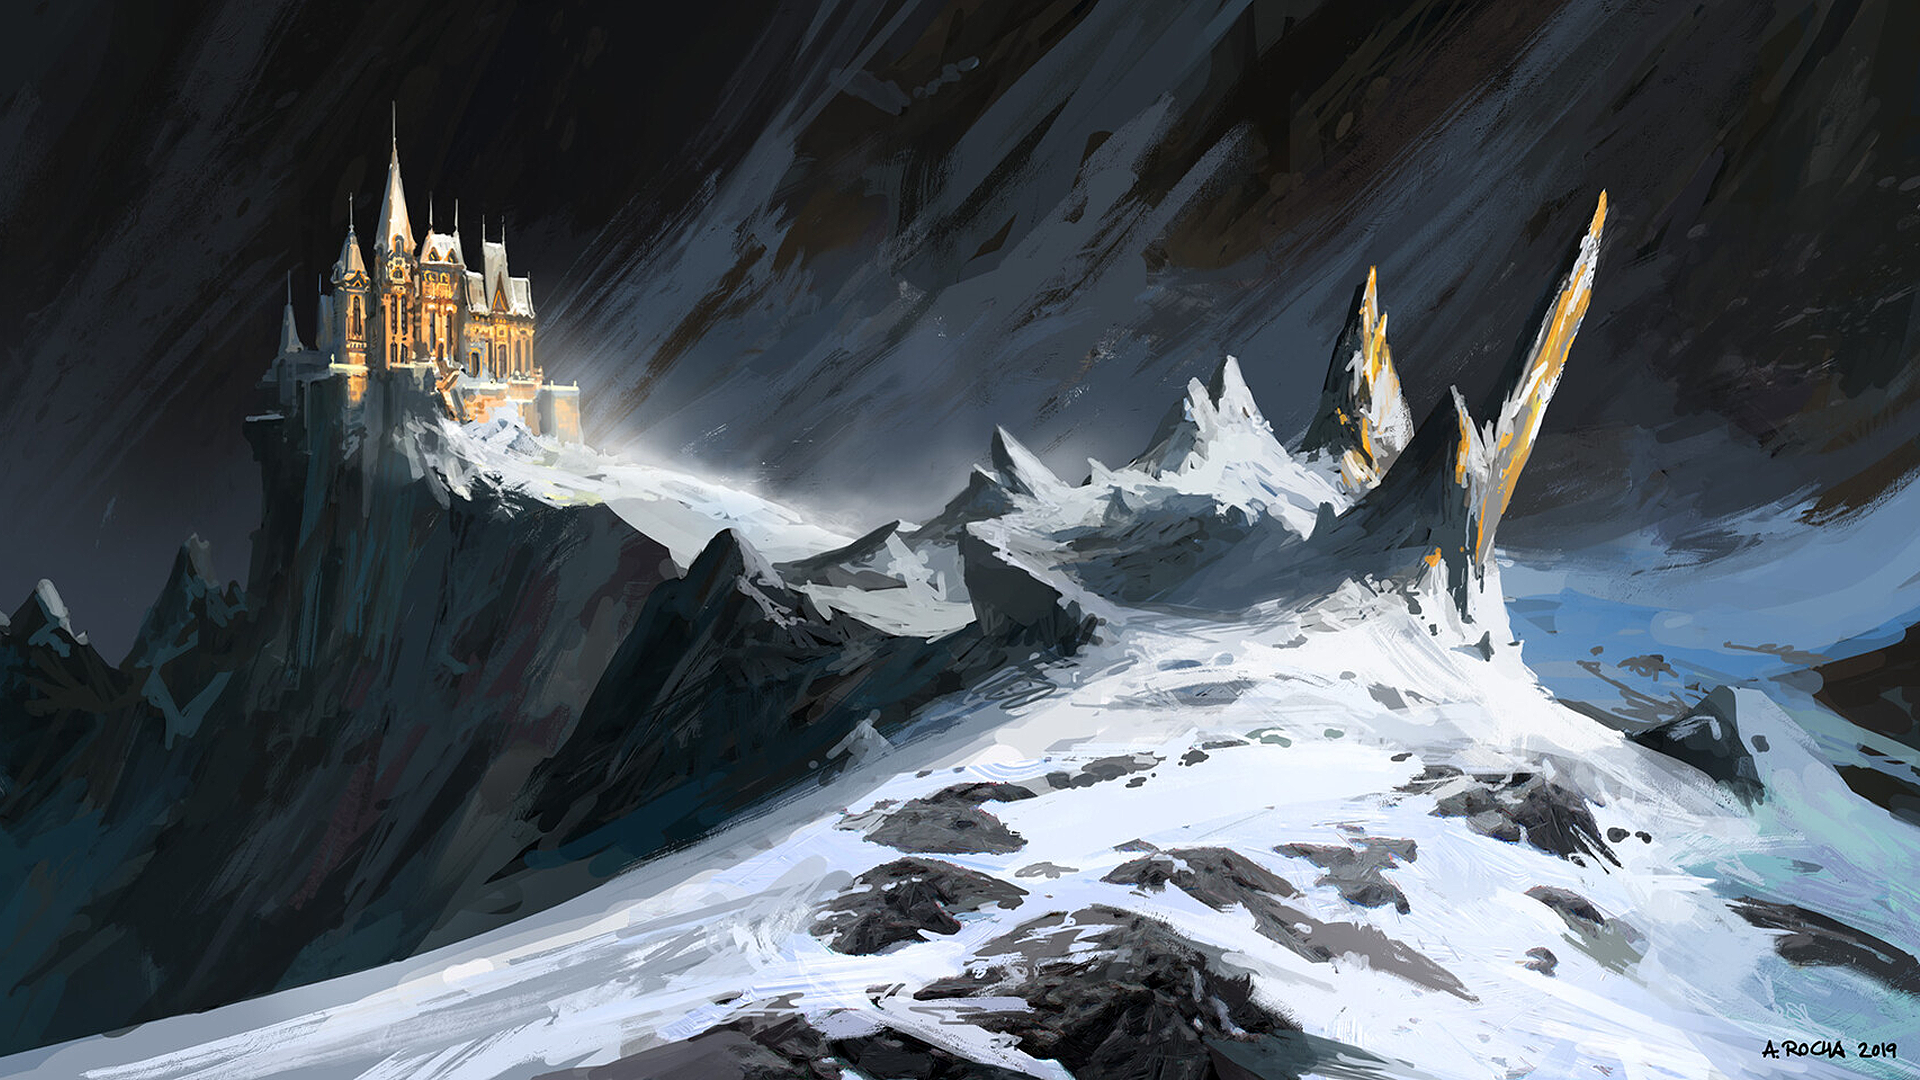 General 1920x1080 Andreas Rocha artwork digital art castle mountains snow stones night landscape